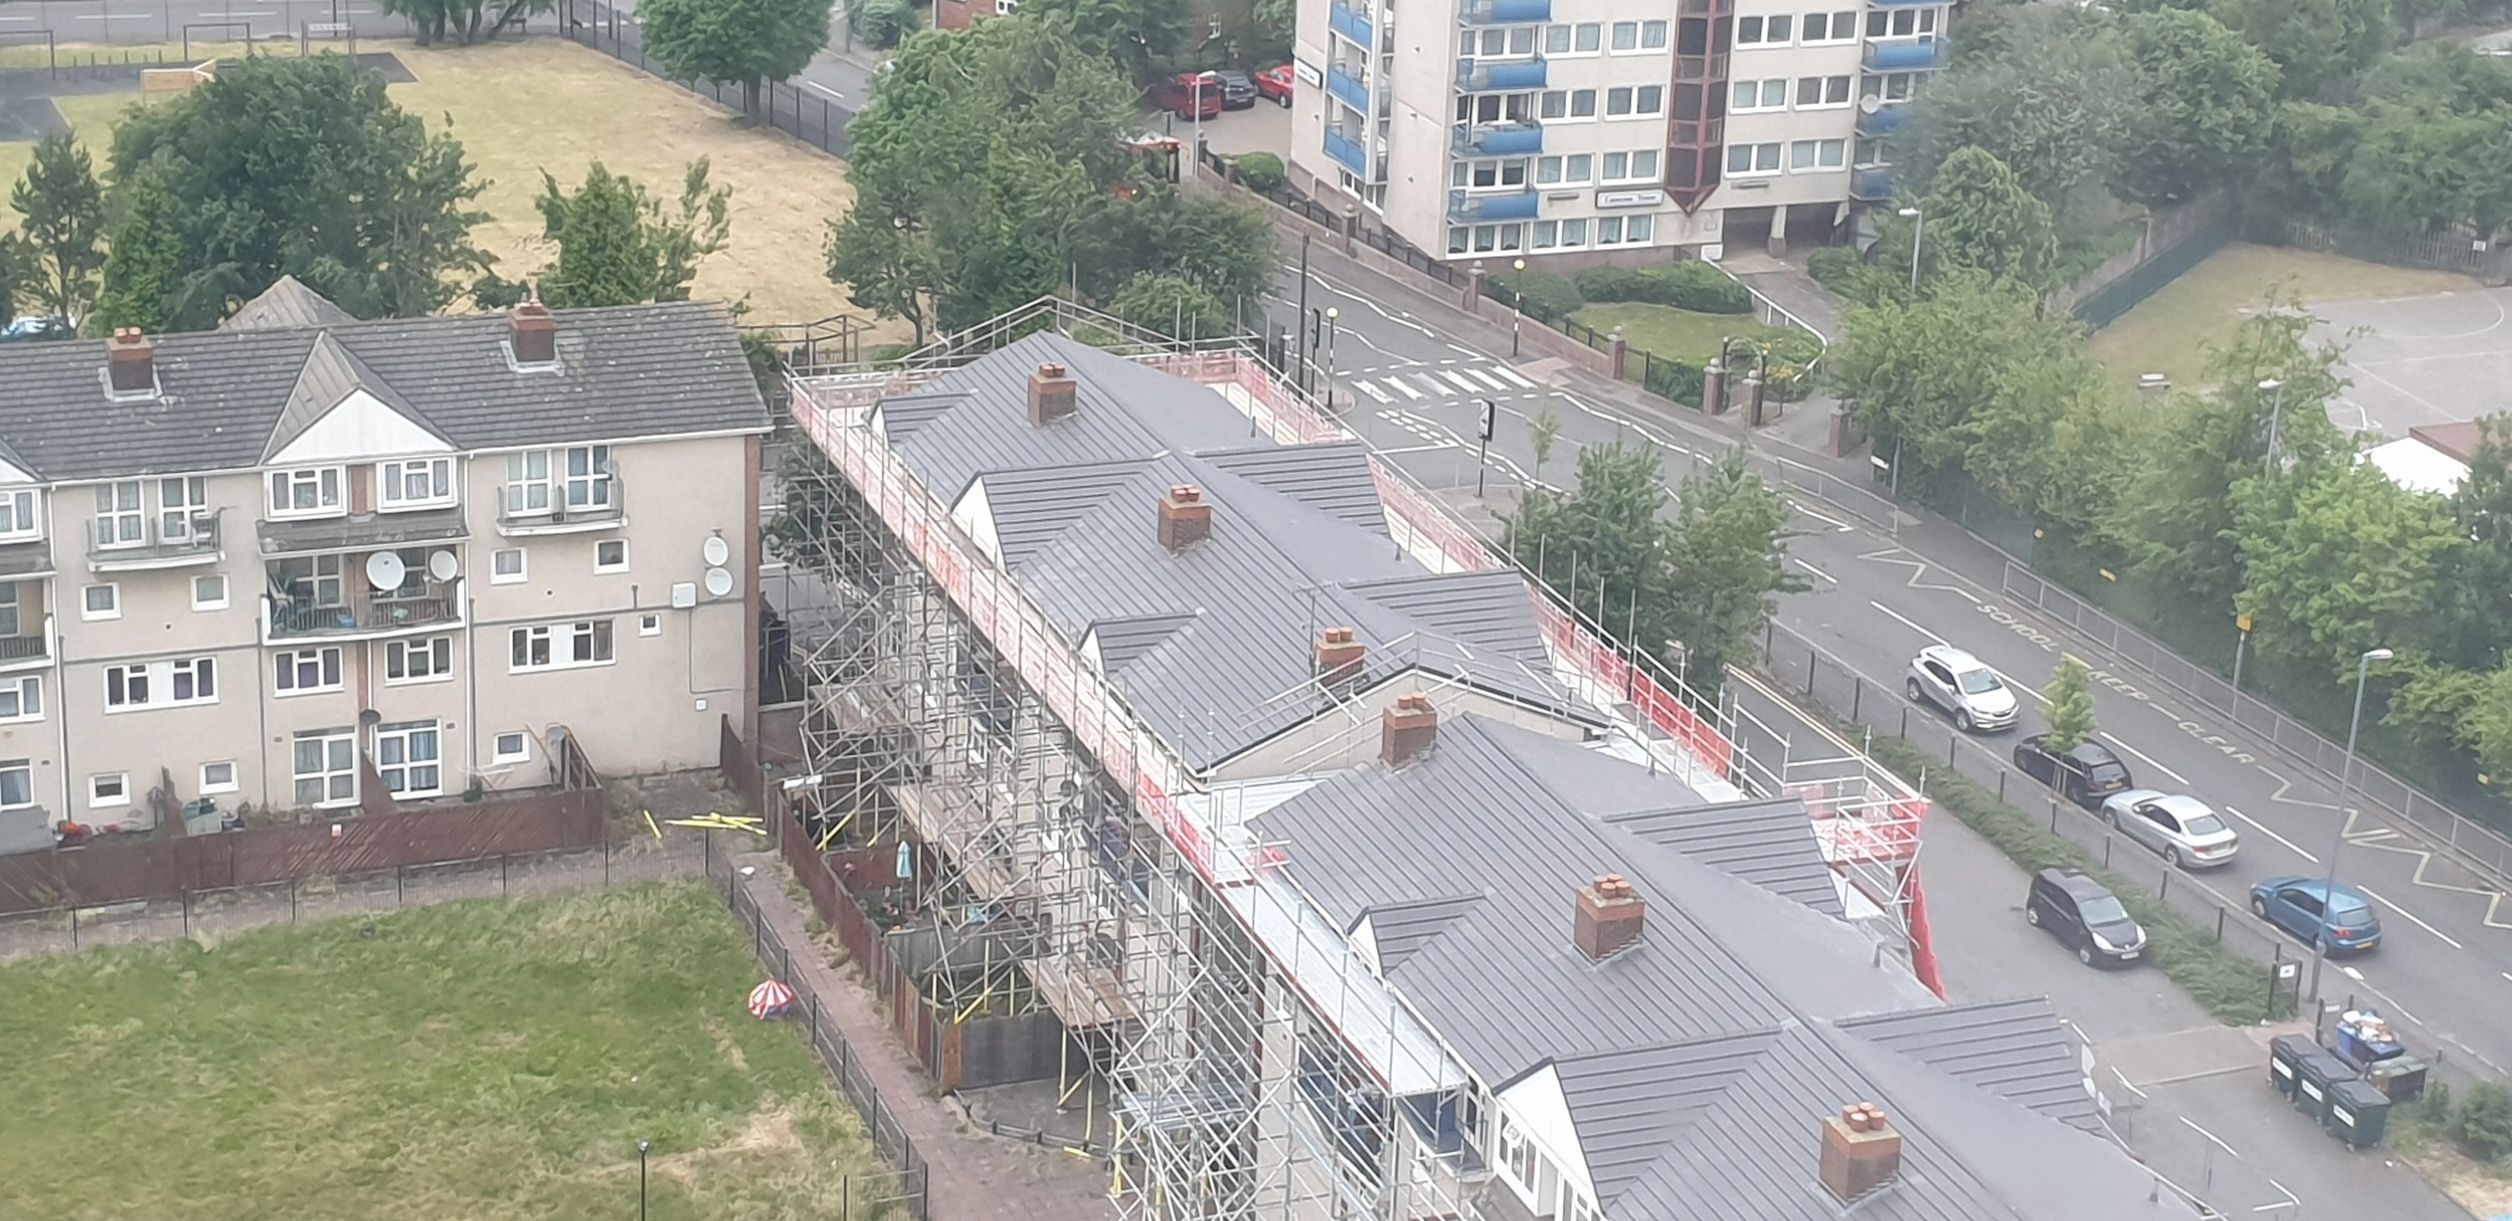 New roof installations at Rocky Lane Jun 2020